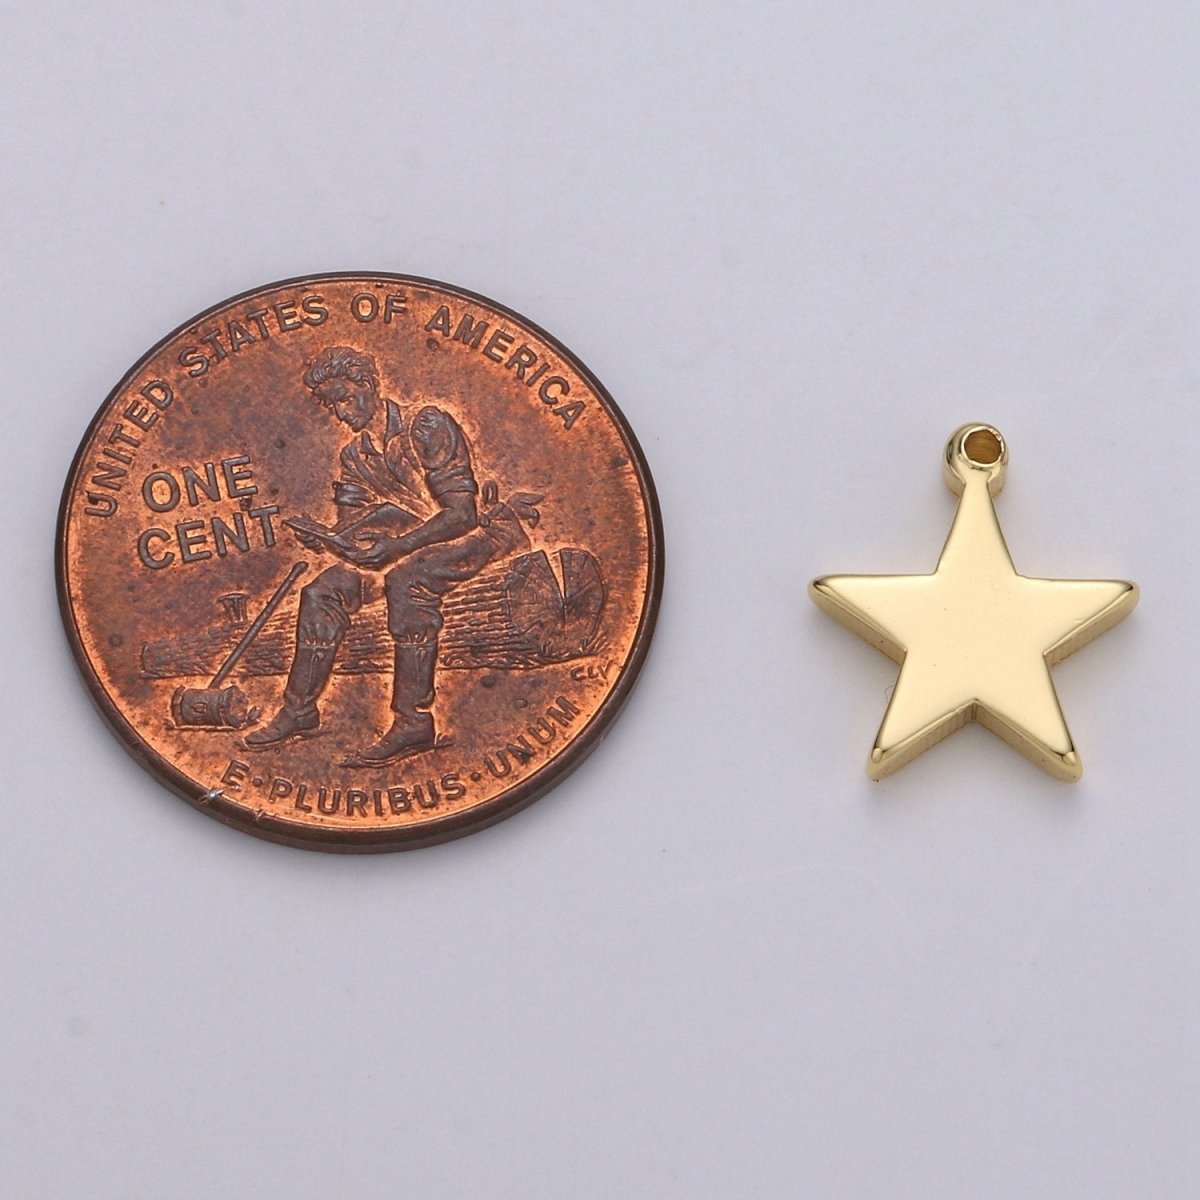 12x12mm 24k Gold Filled Star Charms, Gold Star Pendant, Celestial Jewelry Minimalist Jewelry Making supply, D-683 - DLUXCA